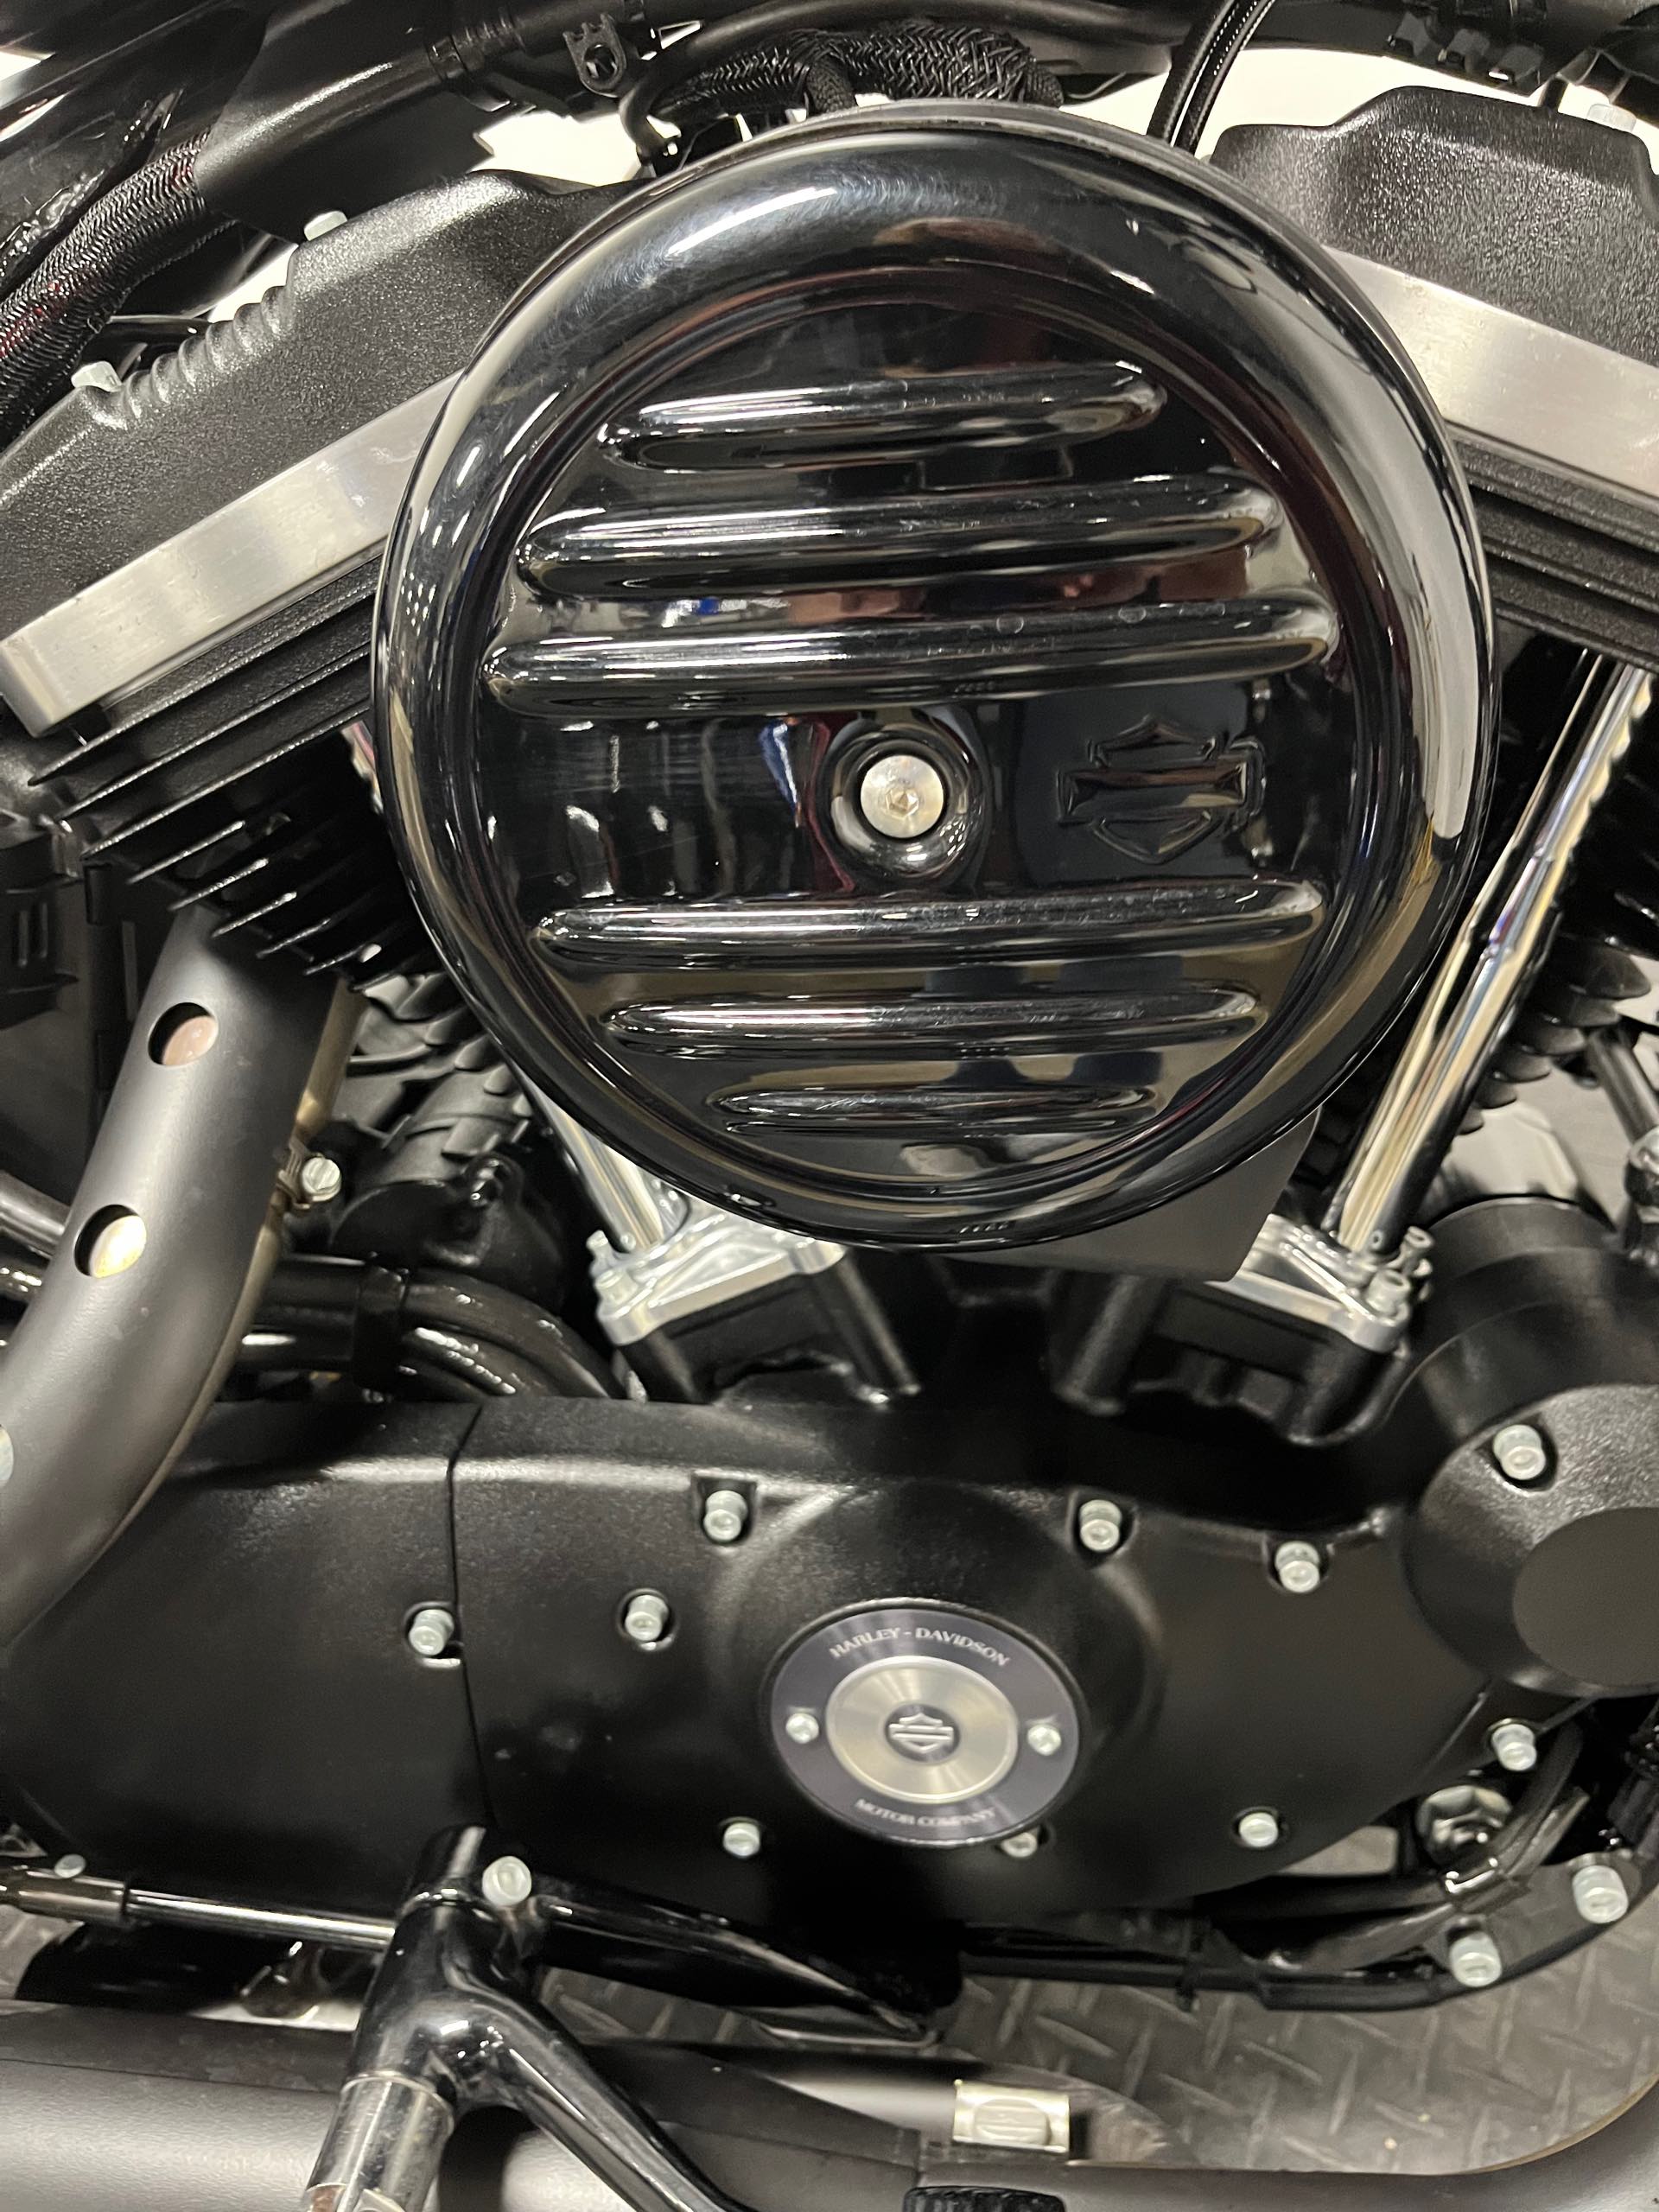 2019 Harley-Davidson Sportster Iron 883 at Cannonball Harley-Davidson